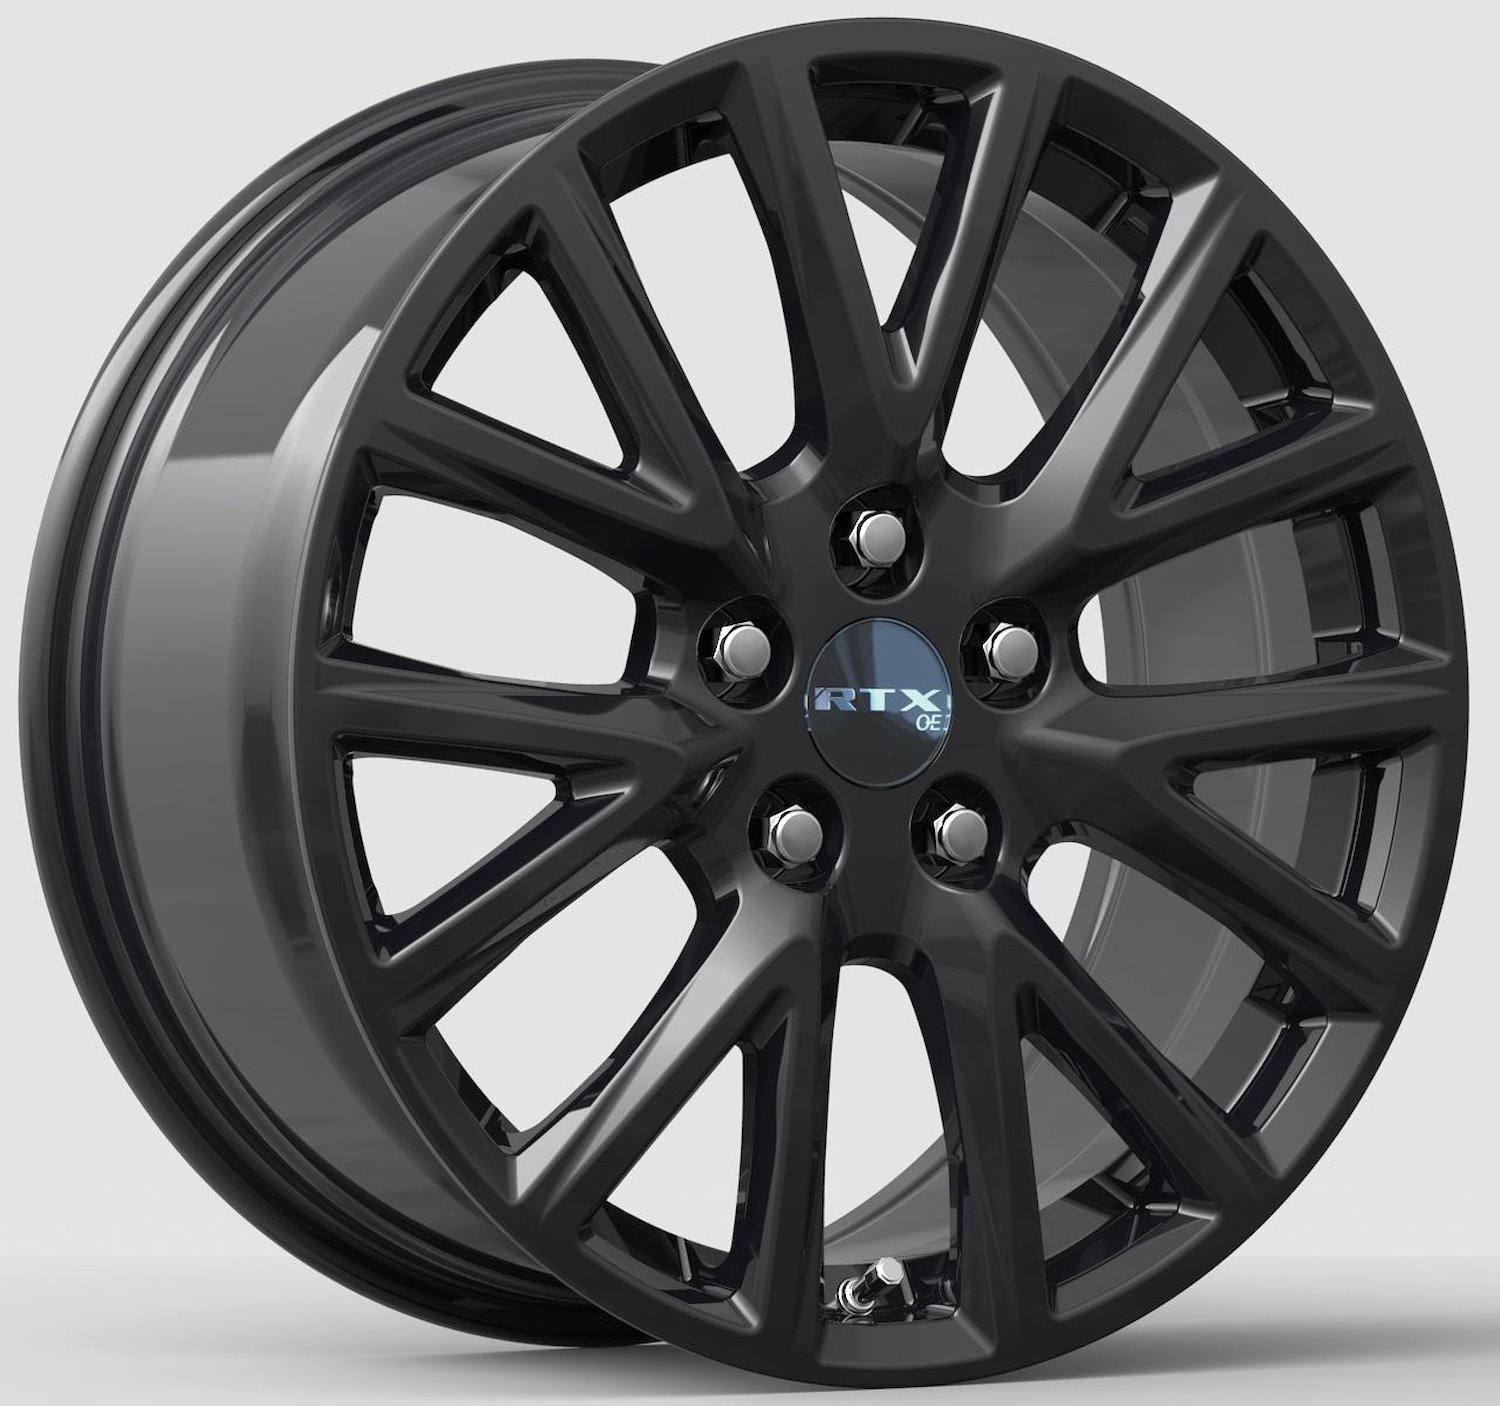 083265 OE-Series GM-06 Wheel [Size: 18" x 8"] Gloss Black Finish